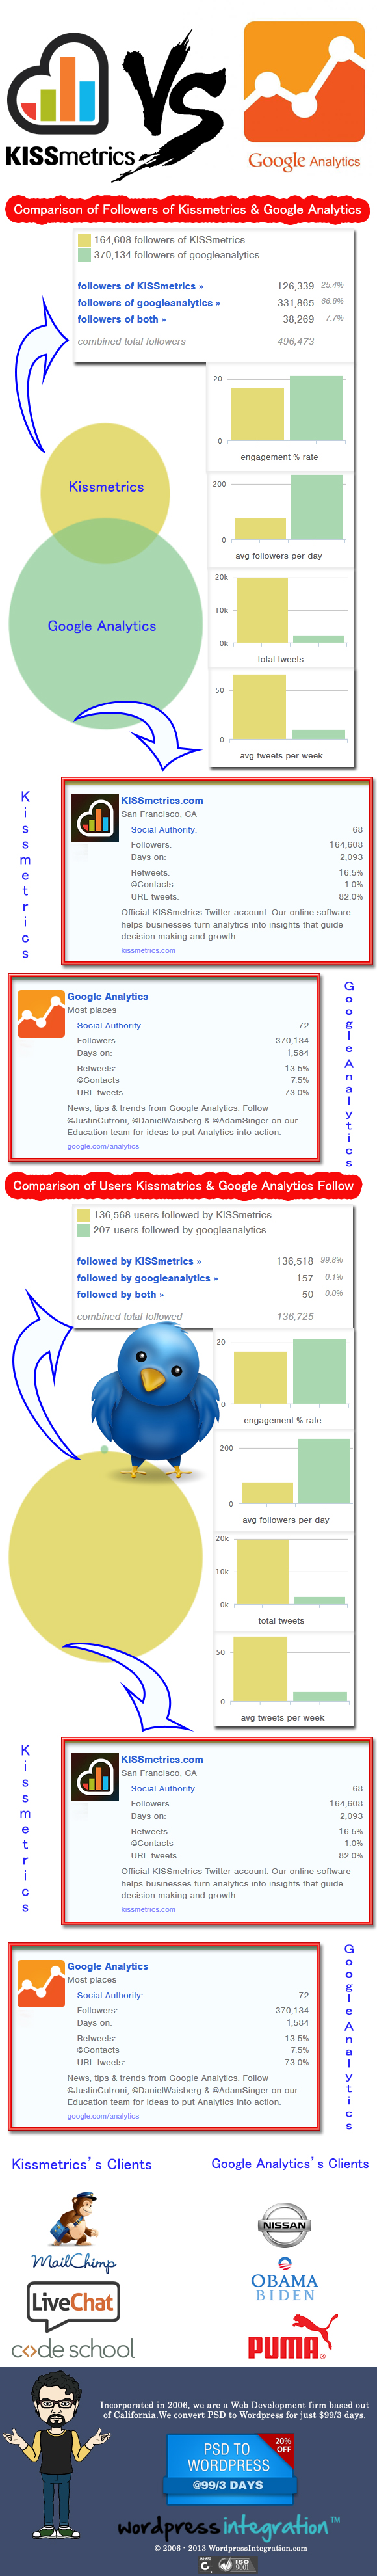 kissmatrics-vs-google-analytics